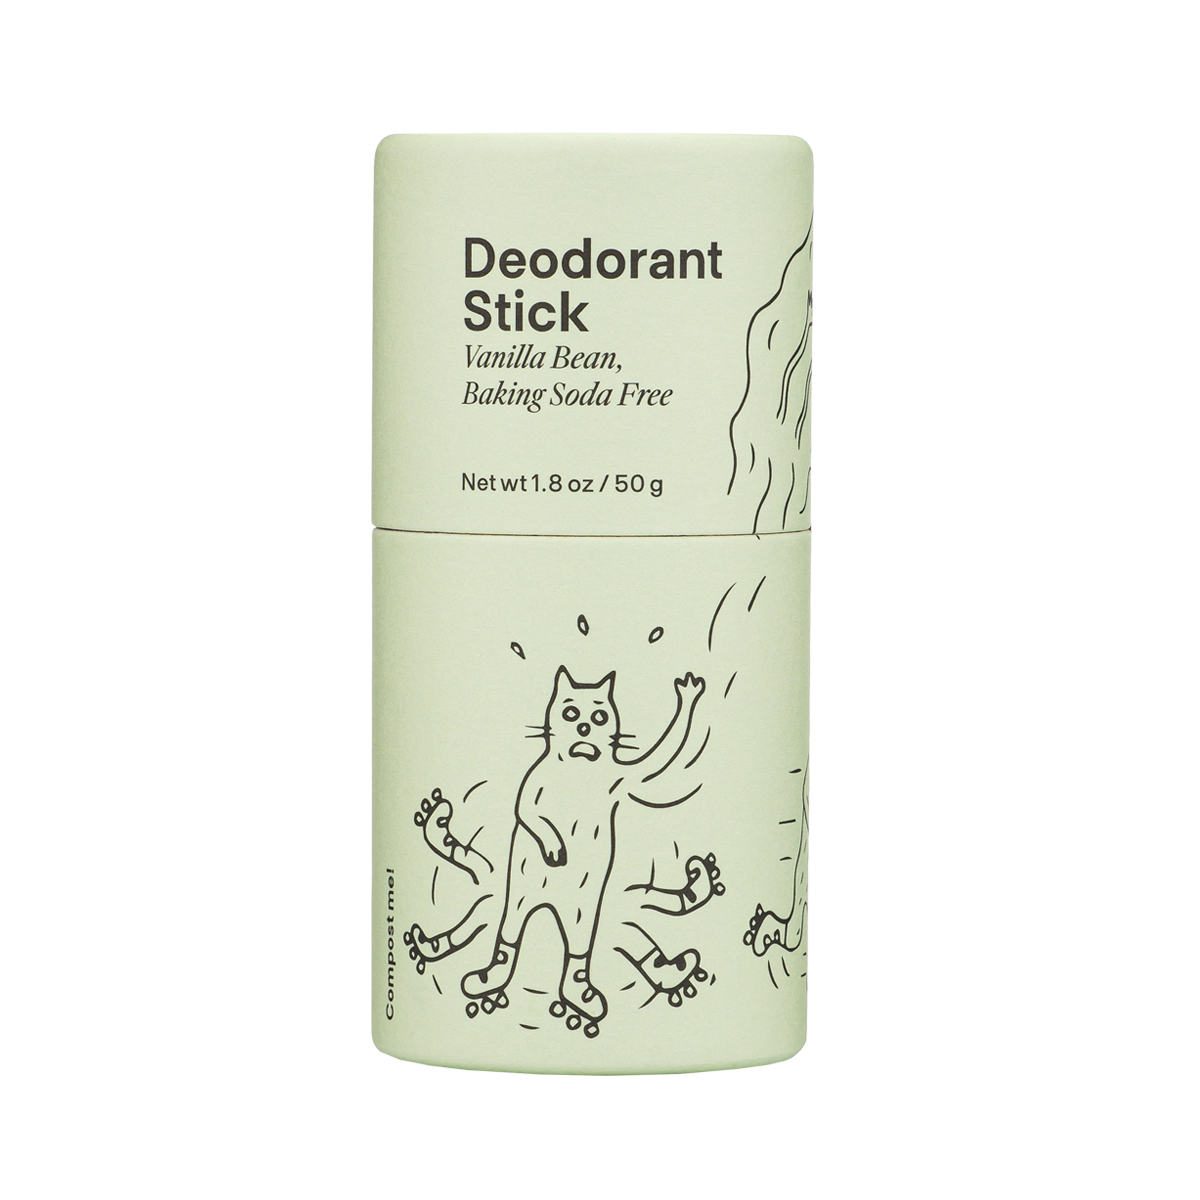 Deodorant Stick - Vanilla Bean